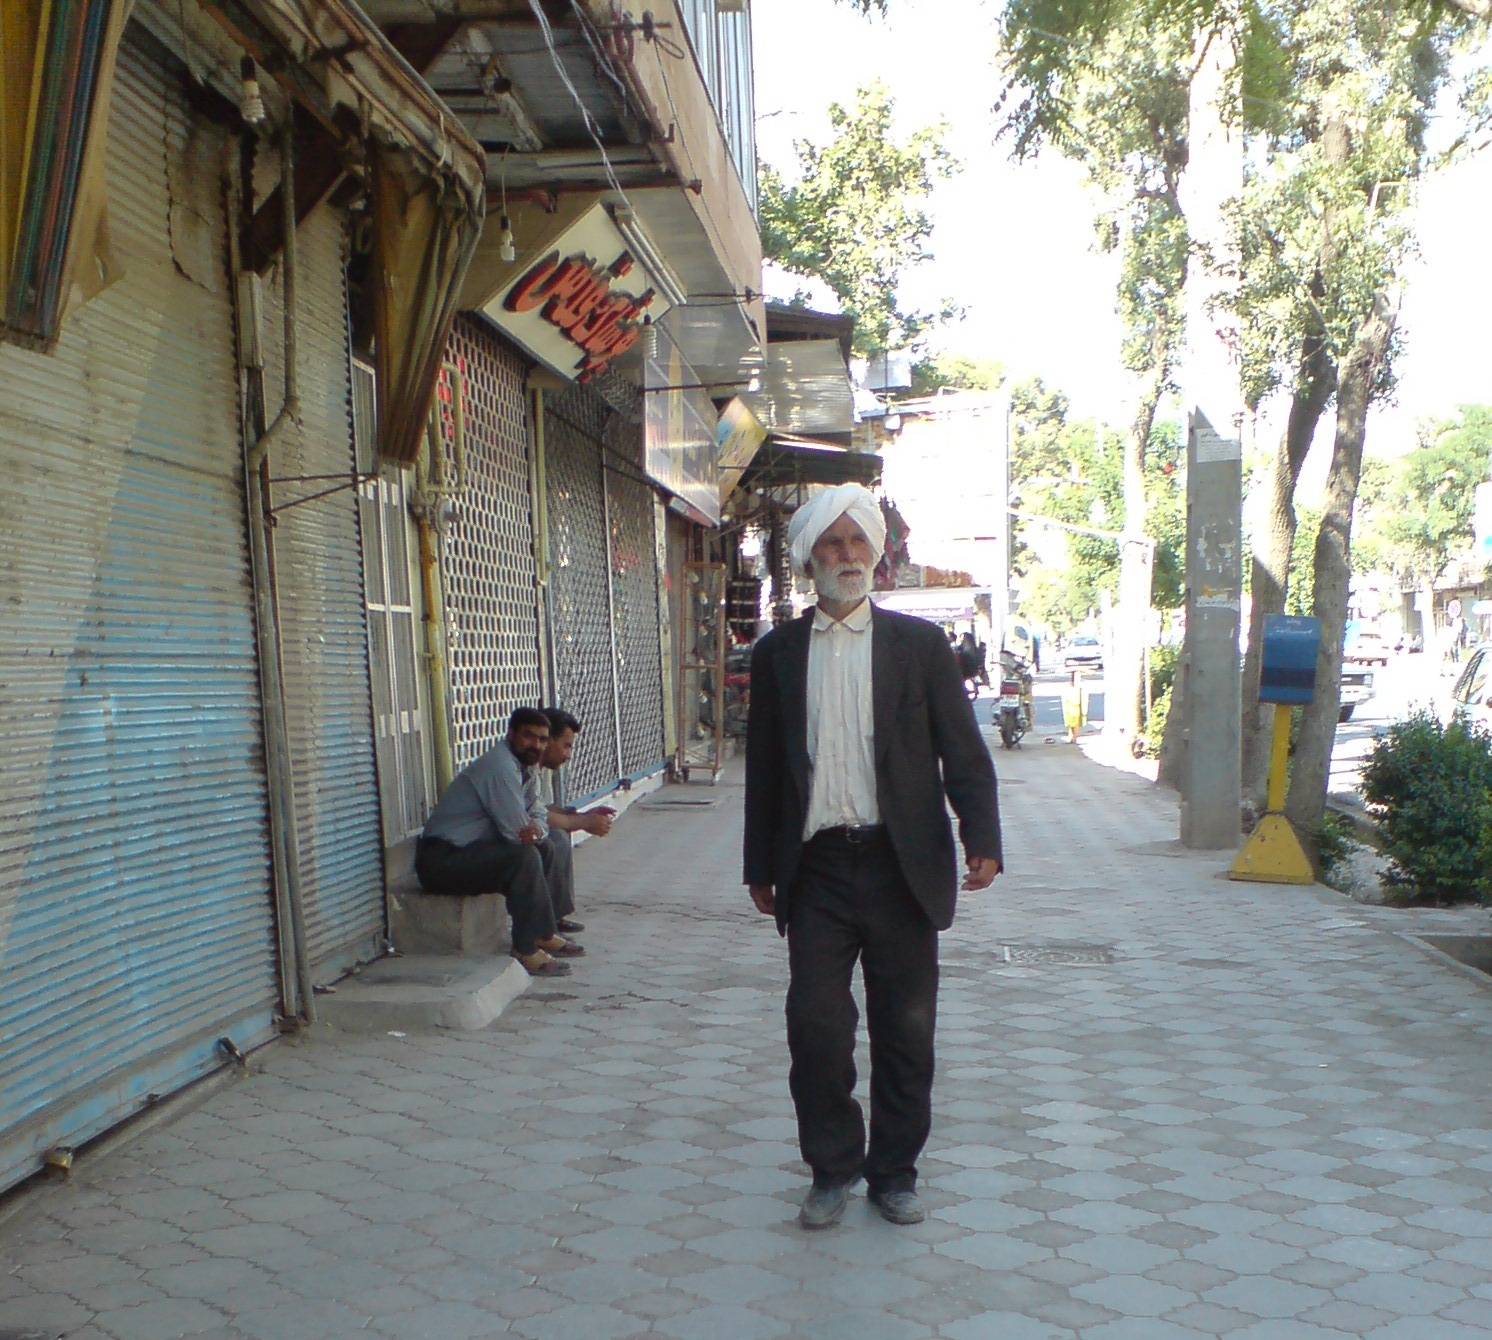 File:Nishapurian oldman walking.jpg - Wikimedia Commons